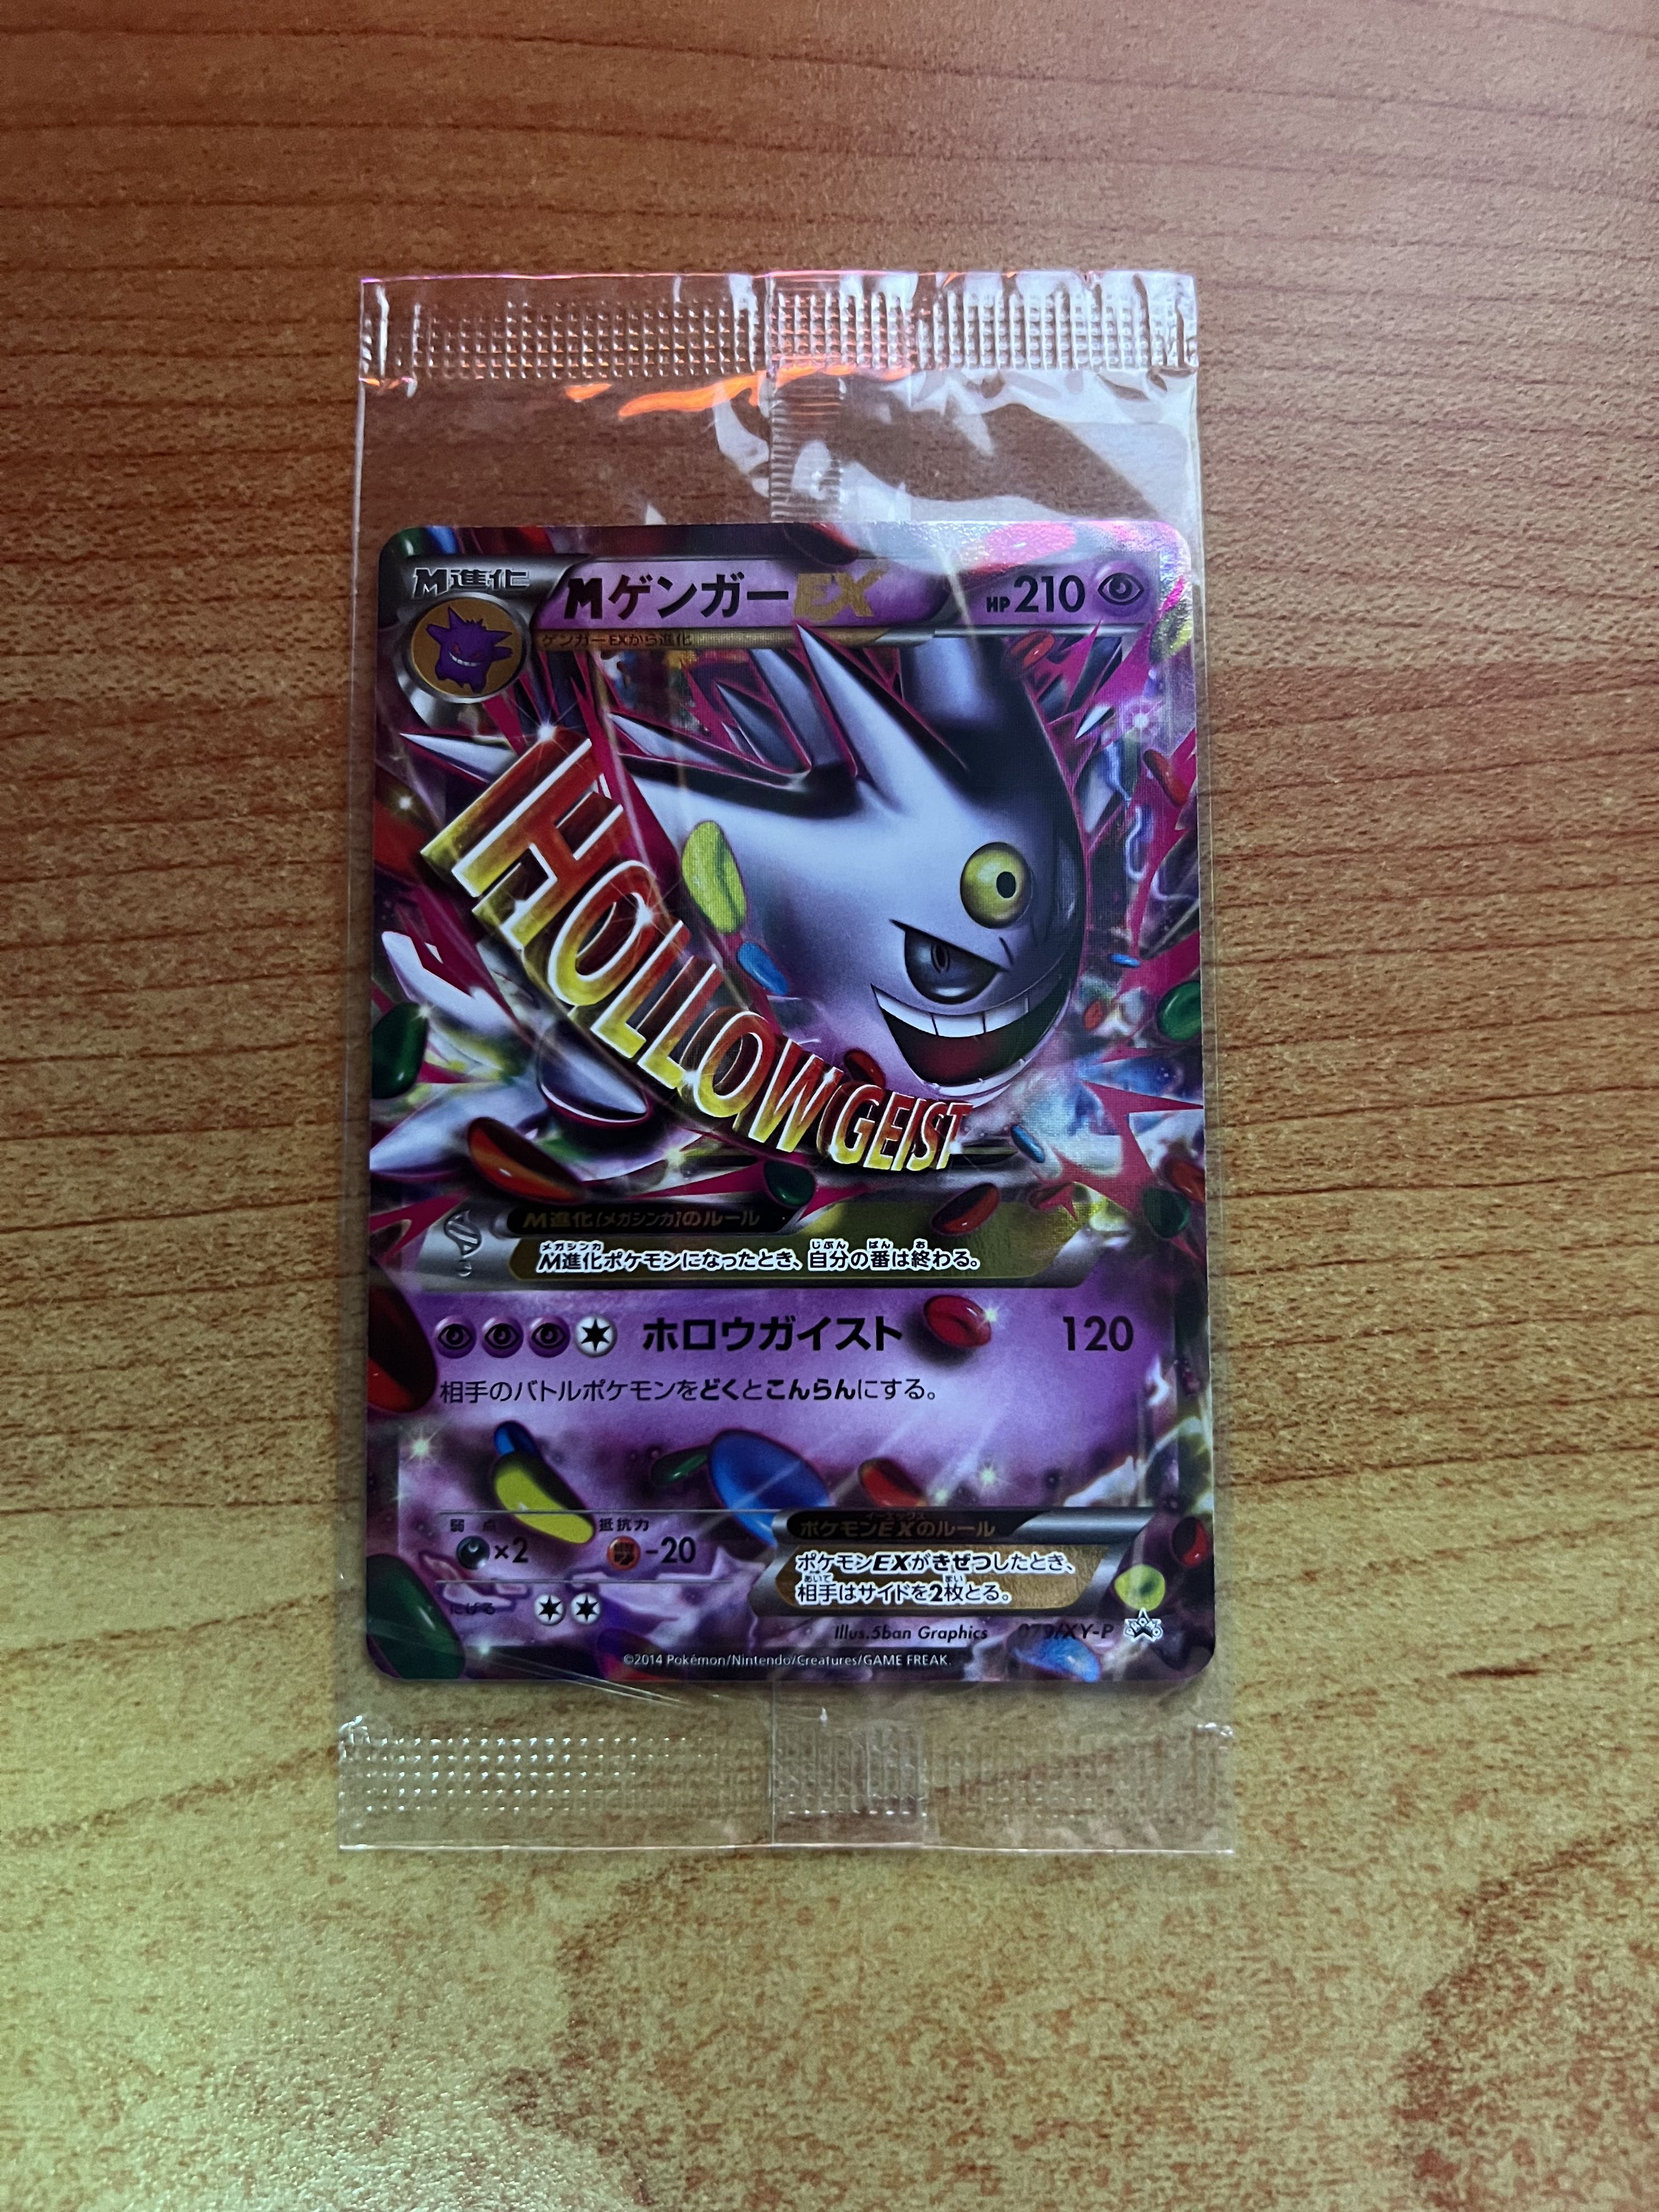 Pokemon Card - Mega Gengar EX - 079/XY-P Pokémon Center Promo - Japanese.